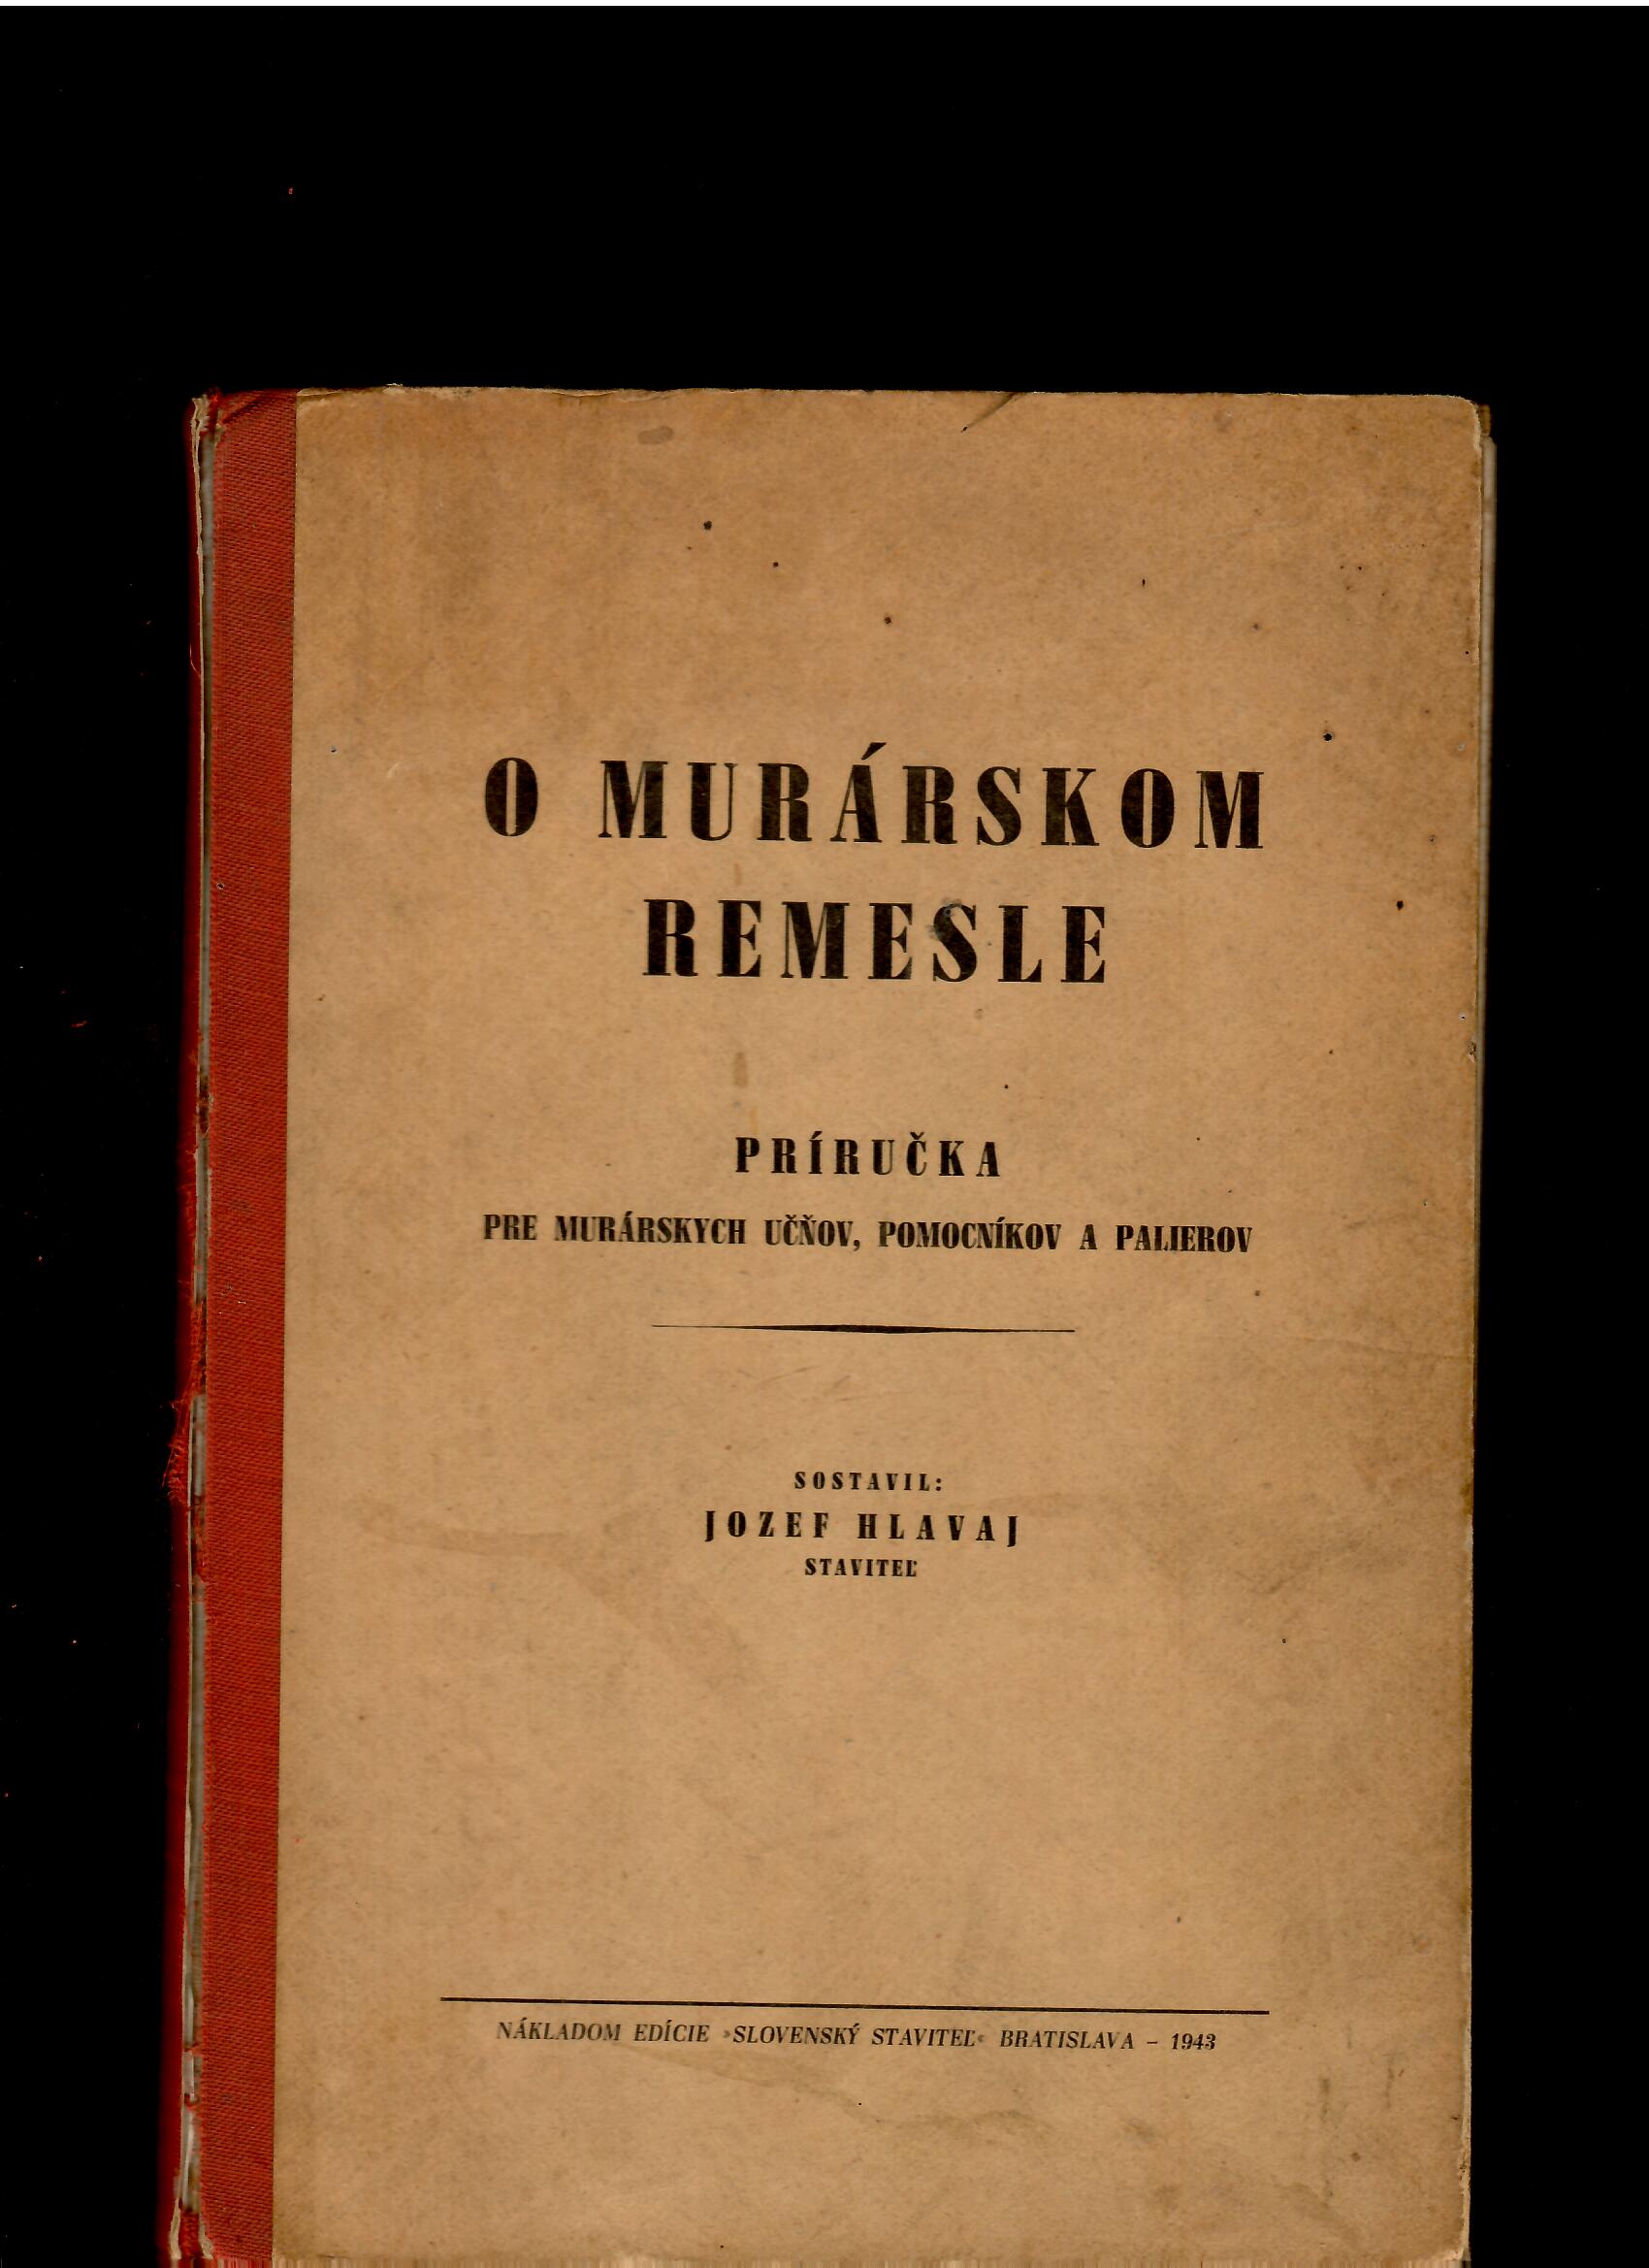 Jozef Hlavaj (ed.): O murárskom remesle /1943/